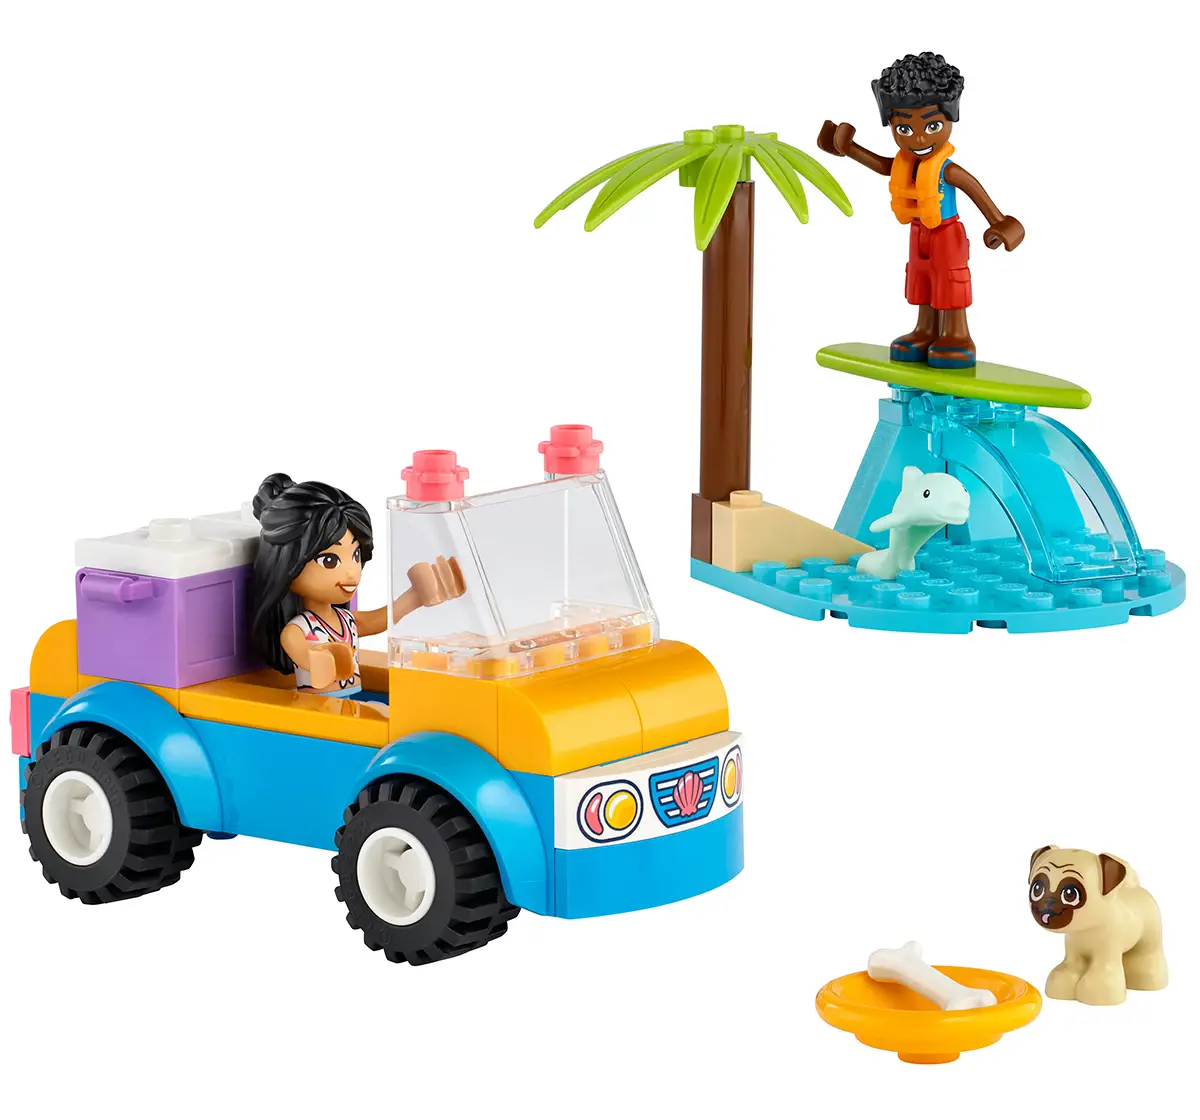 Lego Friends Beach Buggy Fun 41725 Building Toy Set (61 Pieces), 4Y+